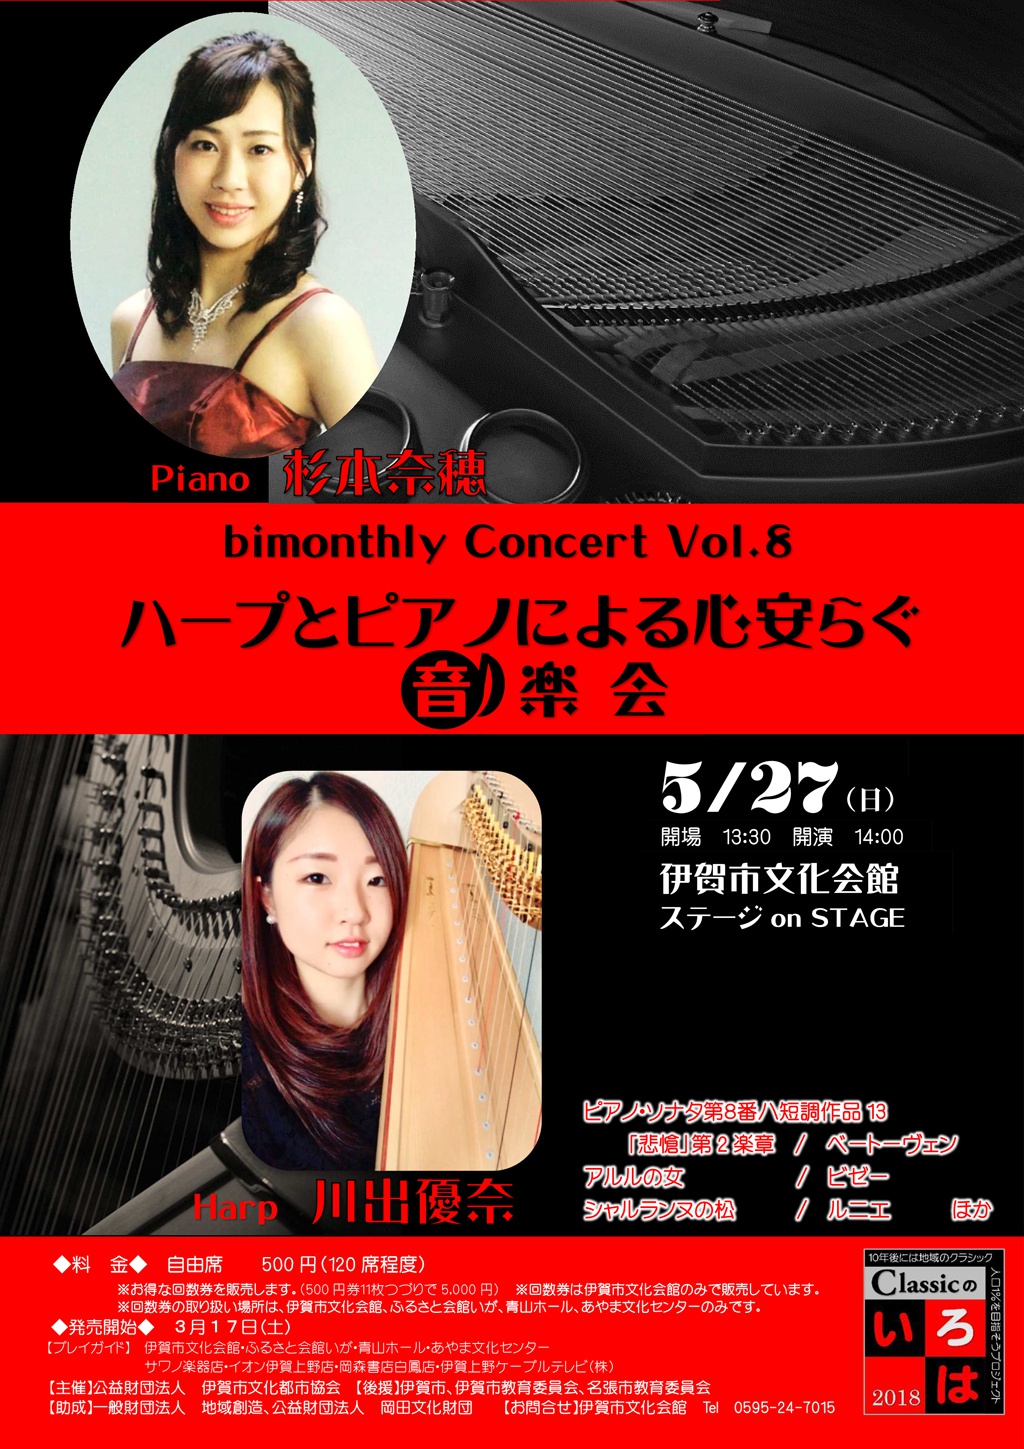 bimonthly Concert Vol.8 ハープとピアノによる心安らぐ音楽会